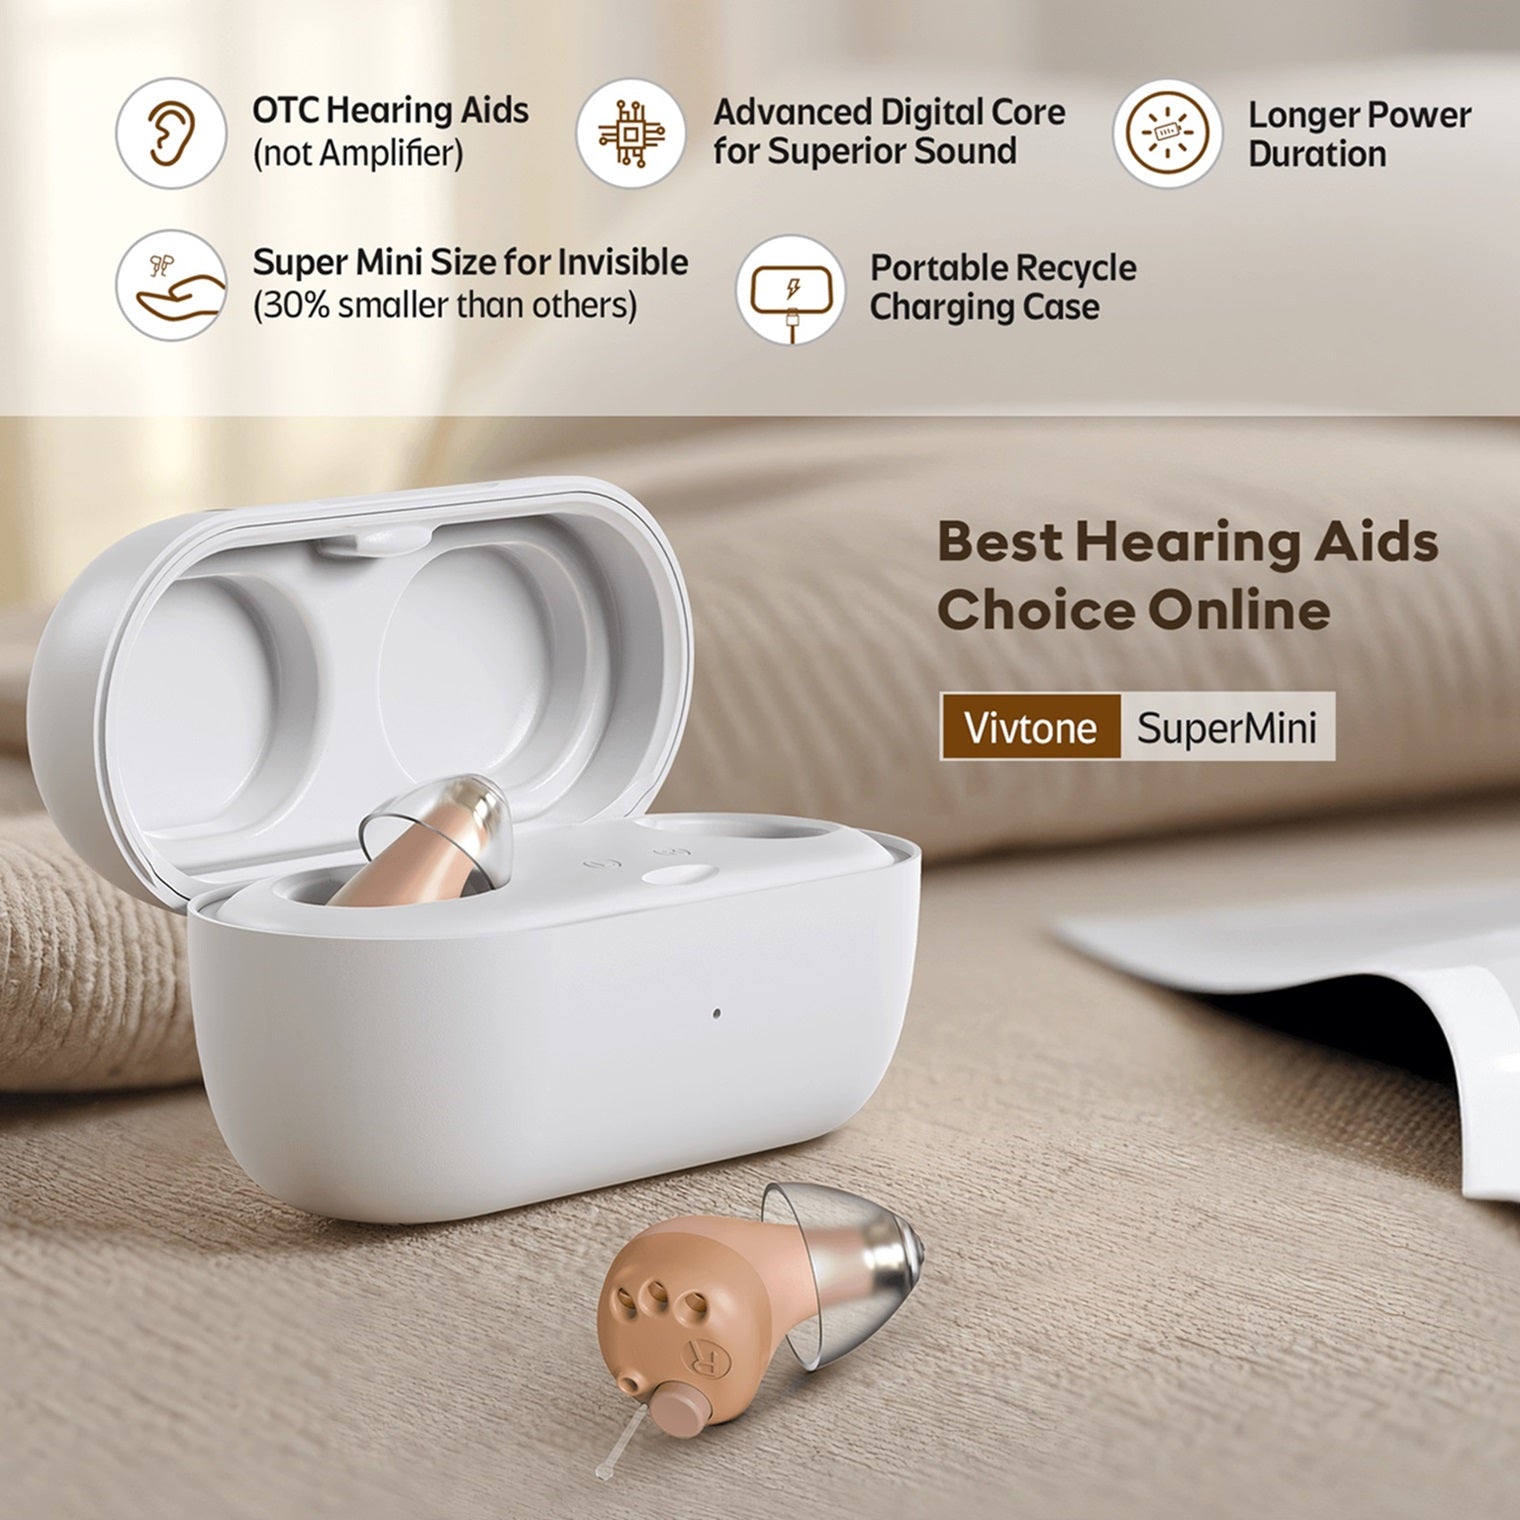 Vivtone Supermini-b5 CIC hearing aids